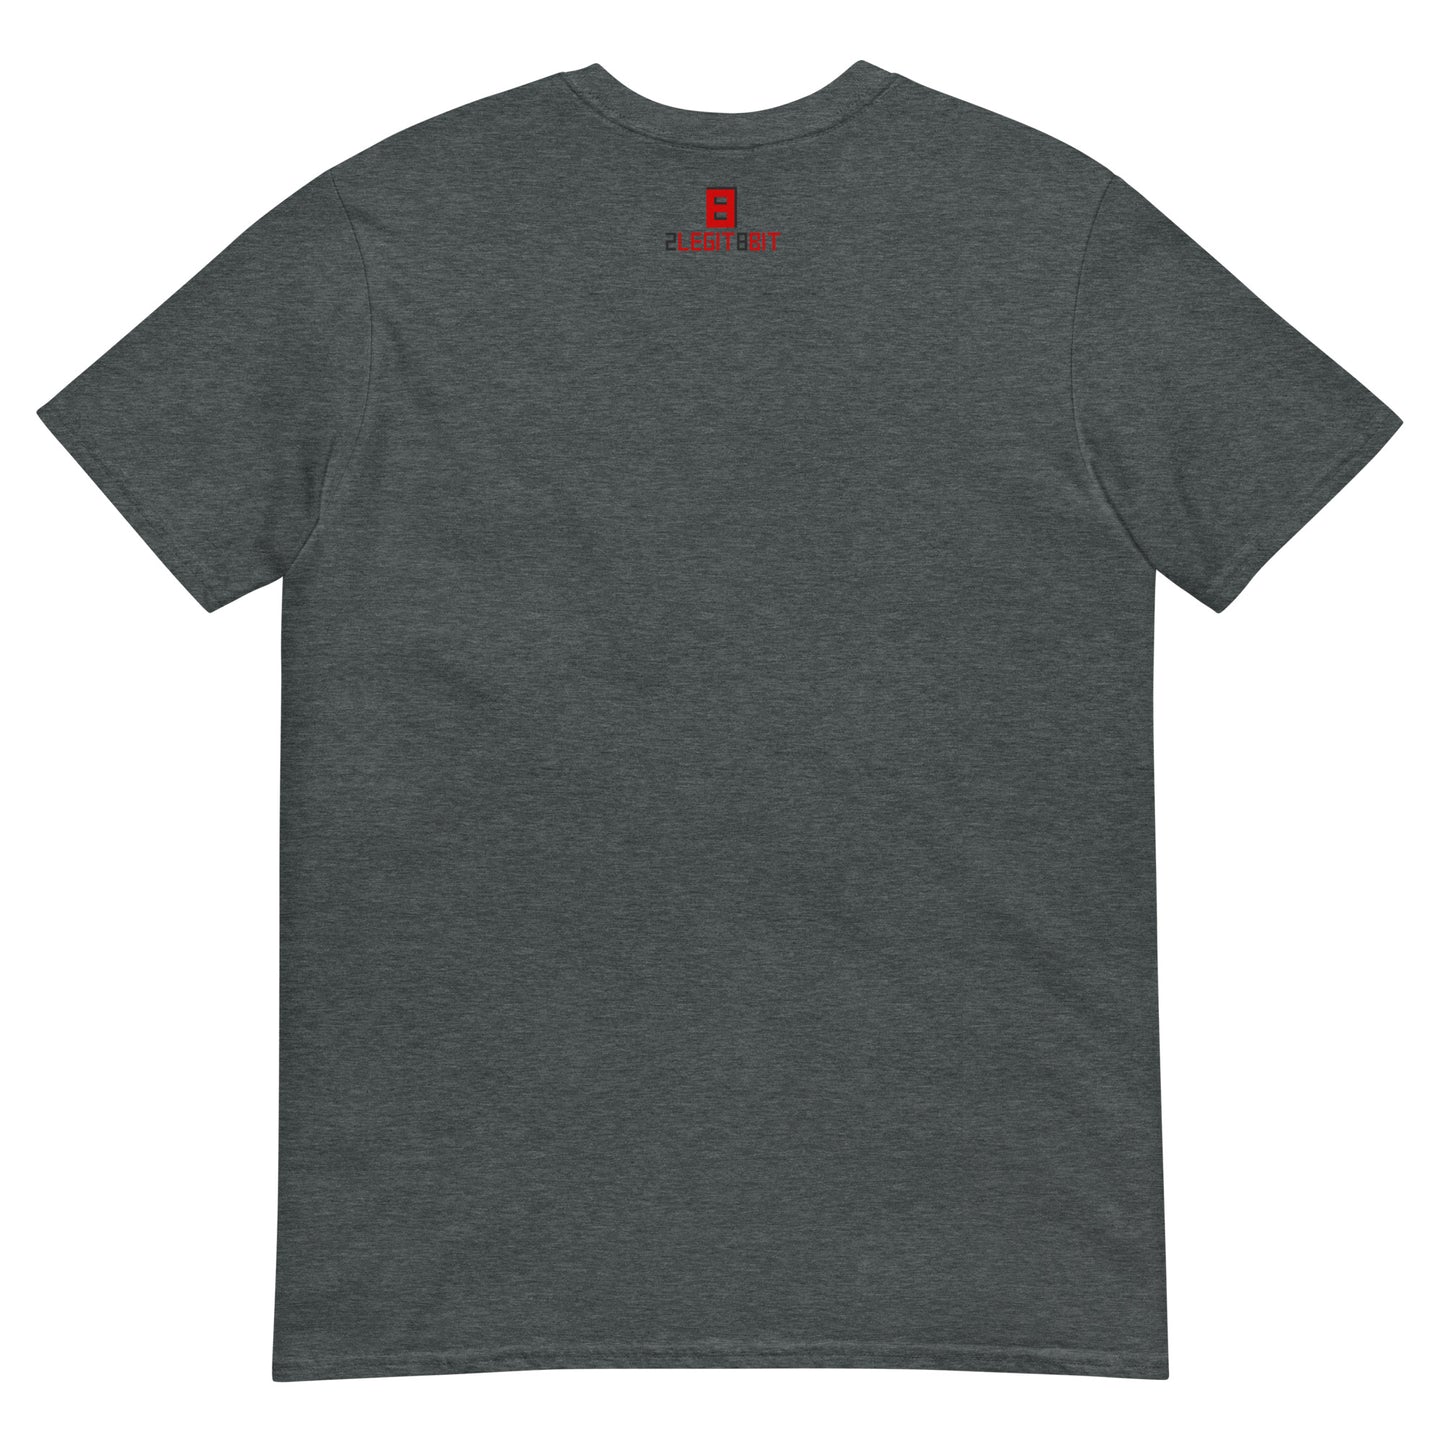 New London Wildcats Alternate Short-Sleeve Unisex T-Shirt